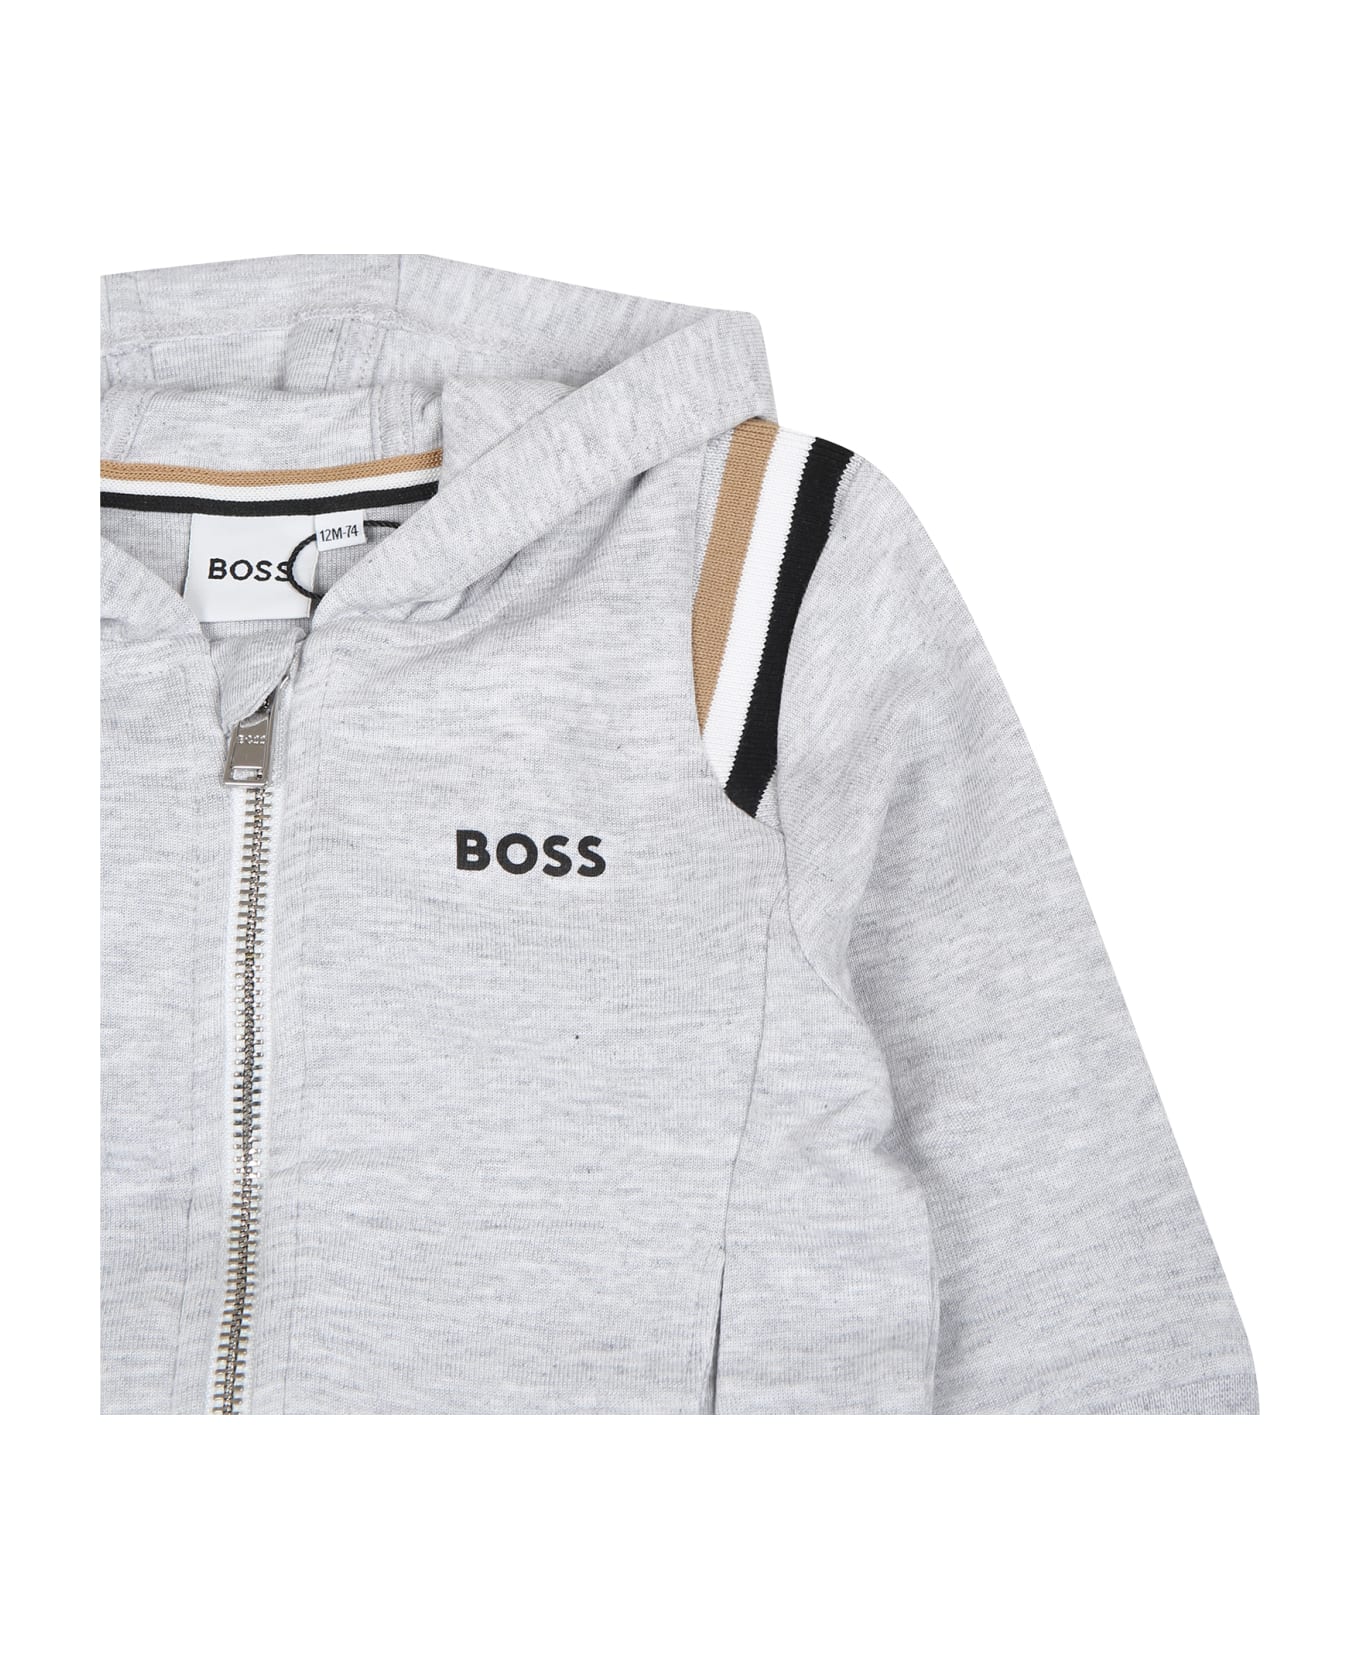 Hugo Boss Grey Suiit For Baby Boy With Logo - Grey